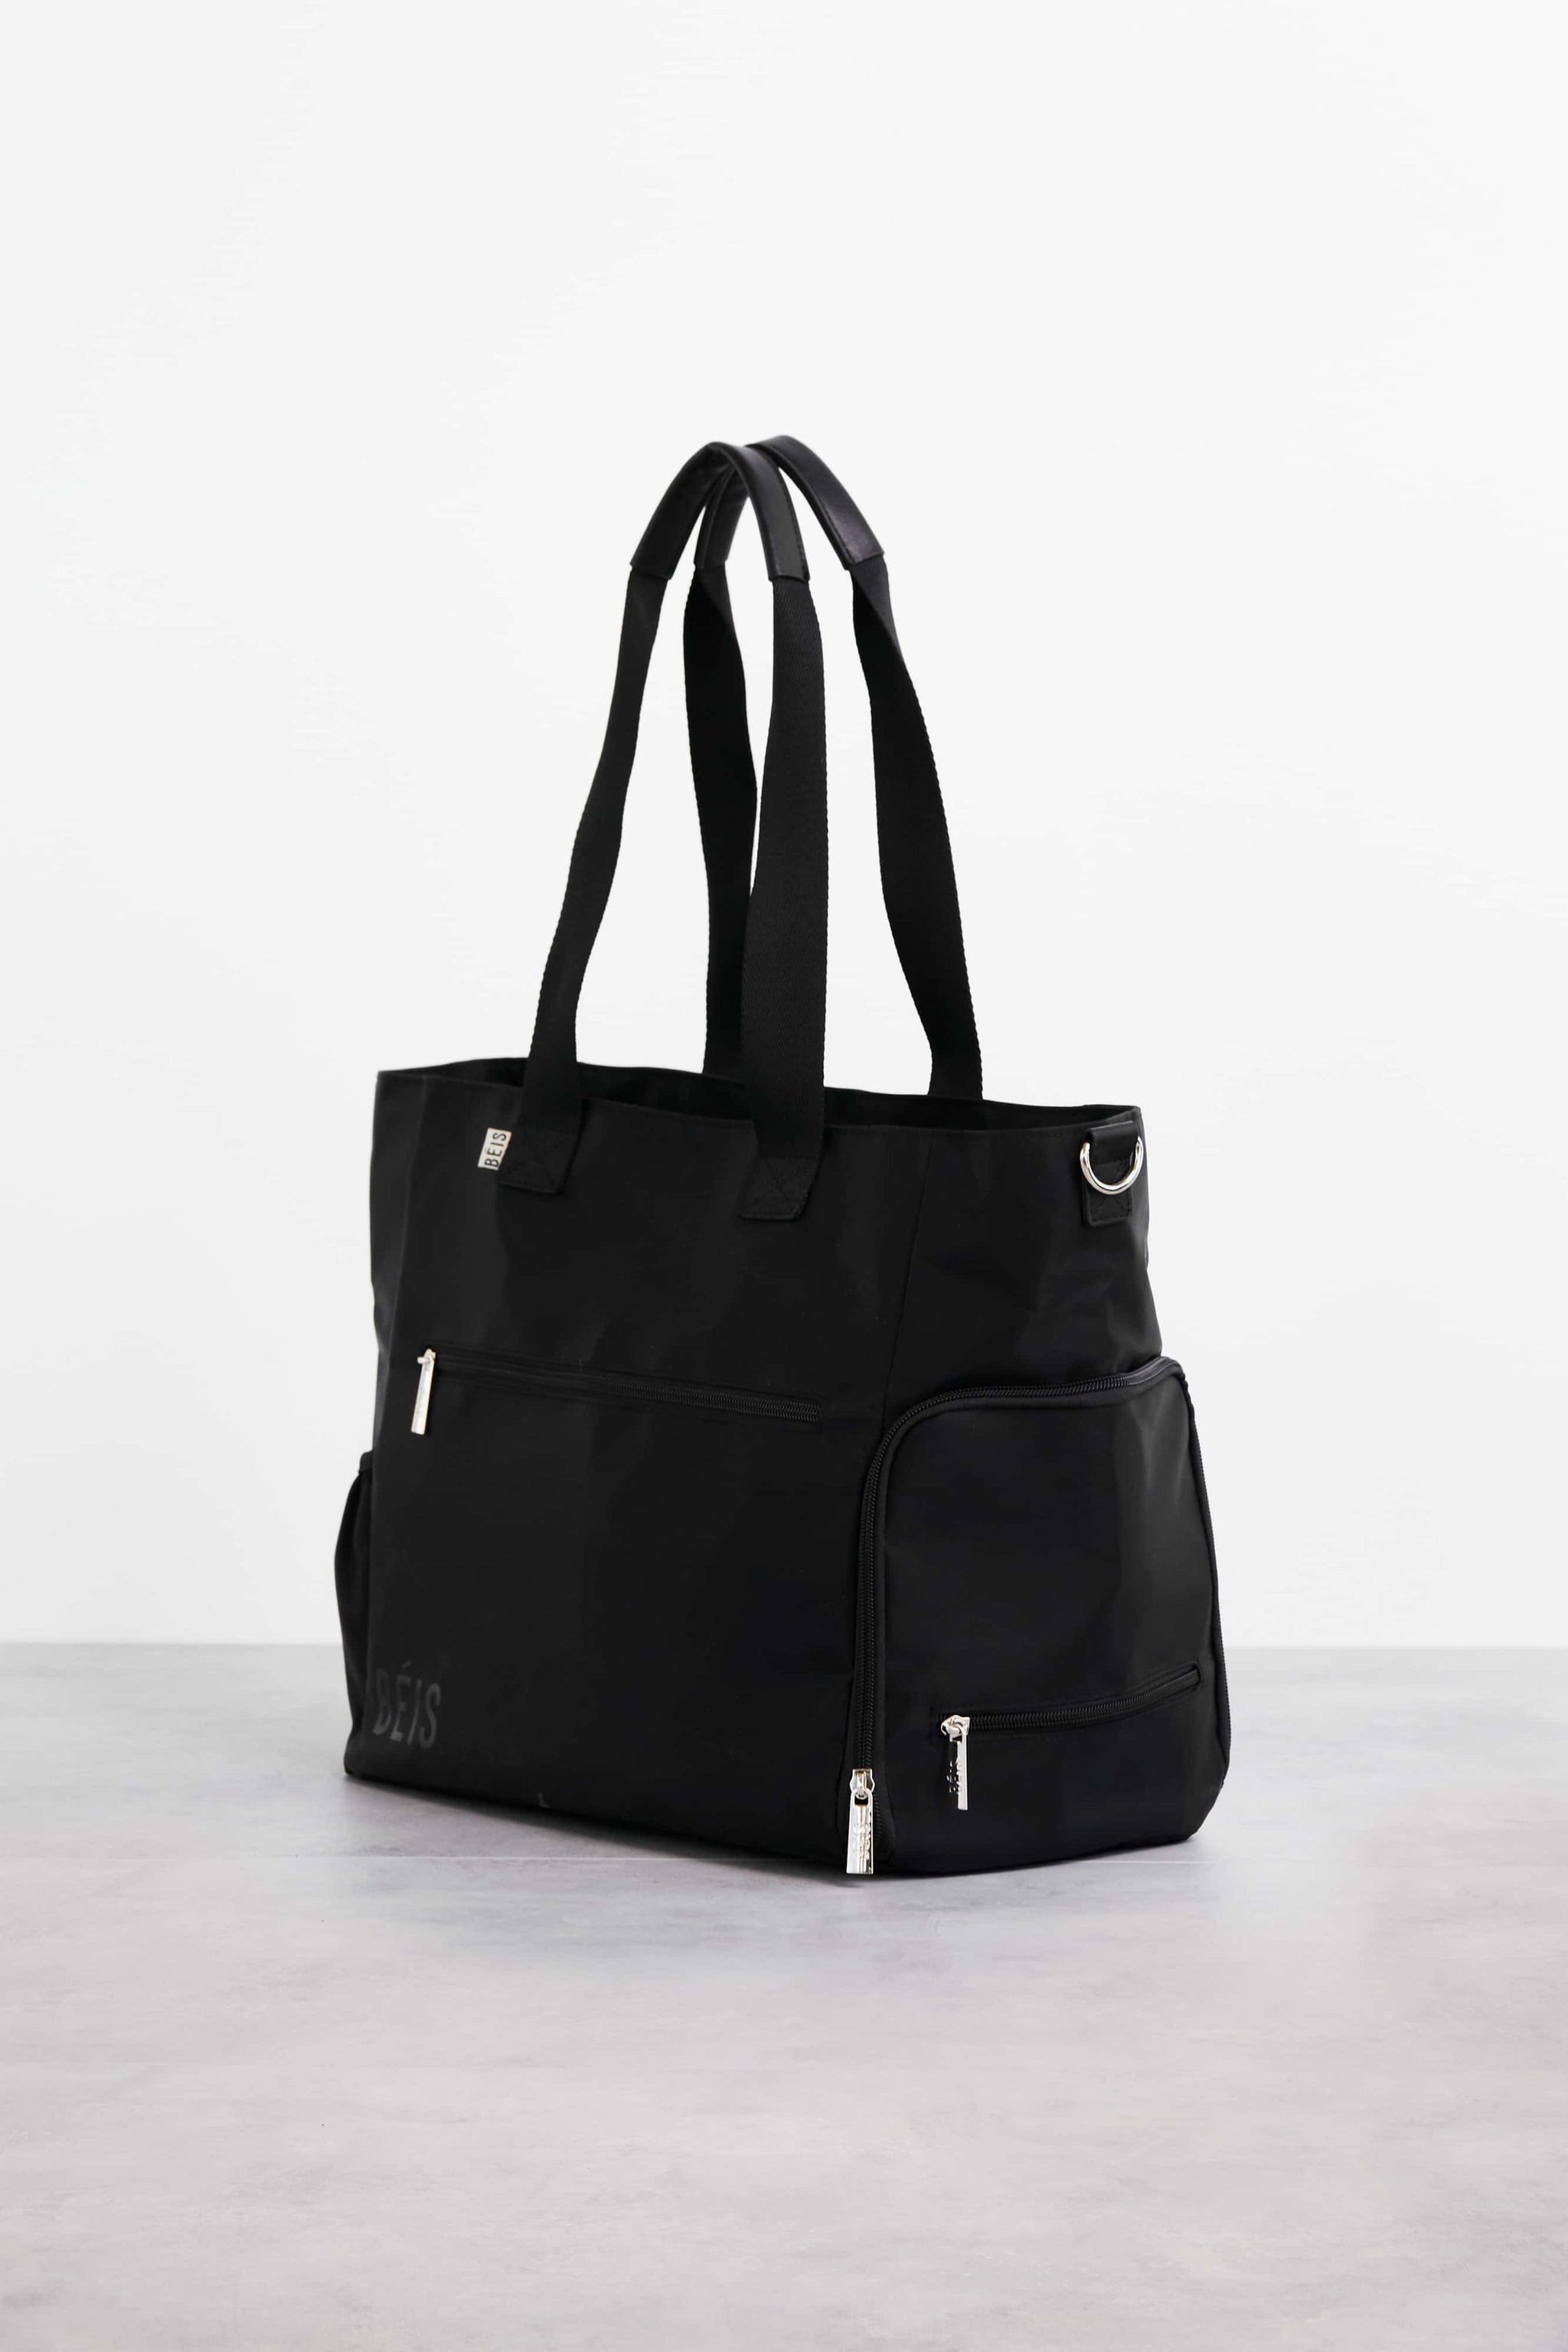 BÉIS 'The Pumping Bag' in Black - Tote Bag For Nursing & Breast Pump Gear